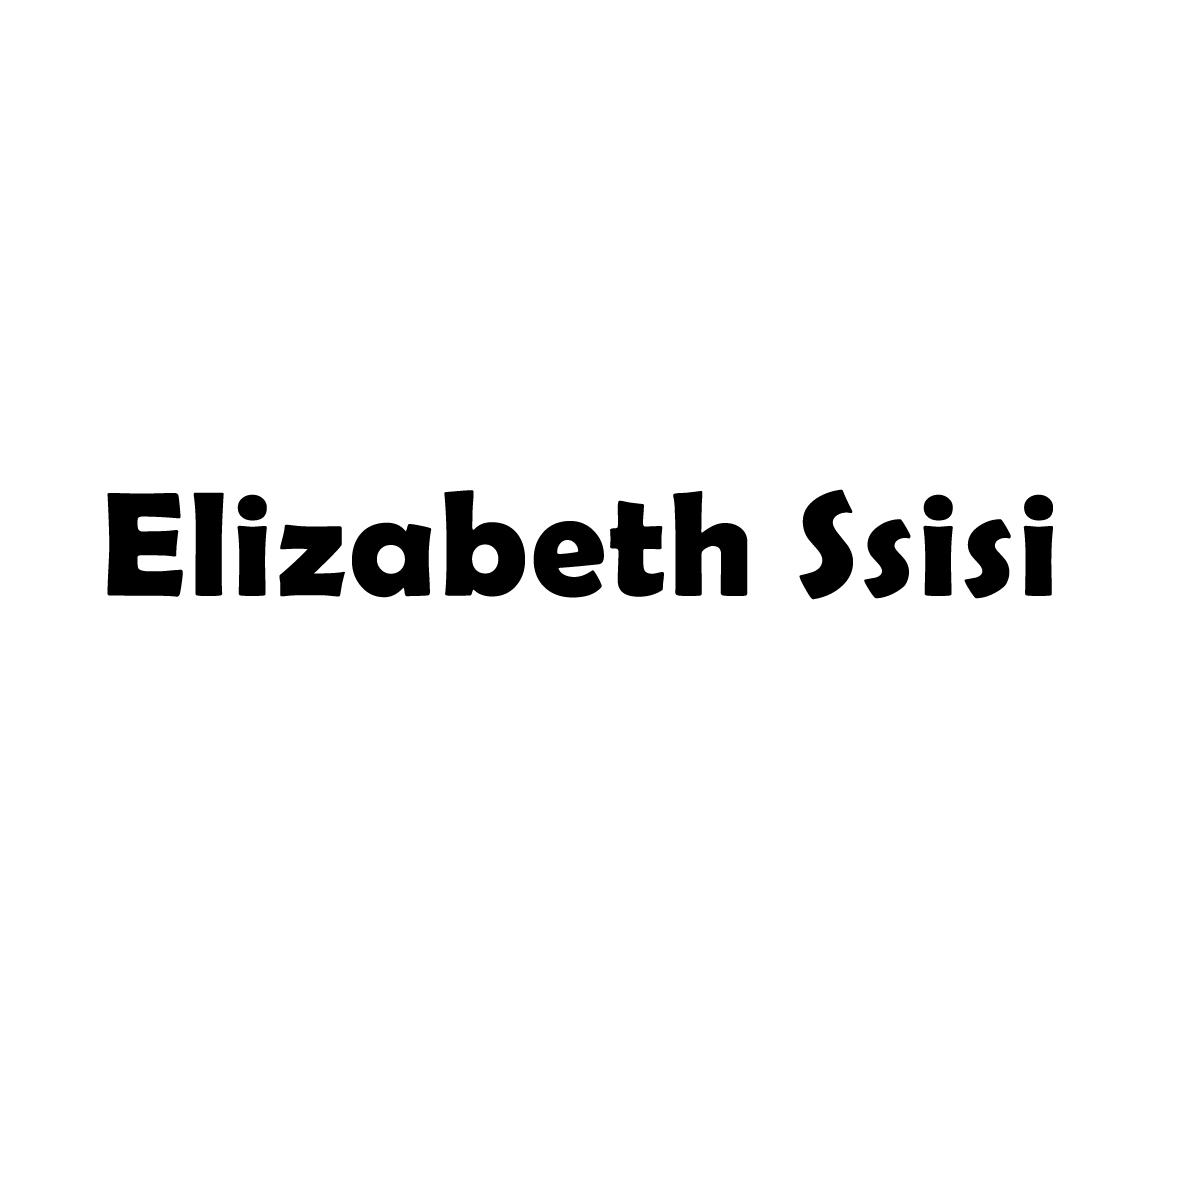 9类科学仪器-ELIZABETH SSISI